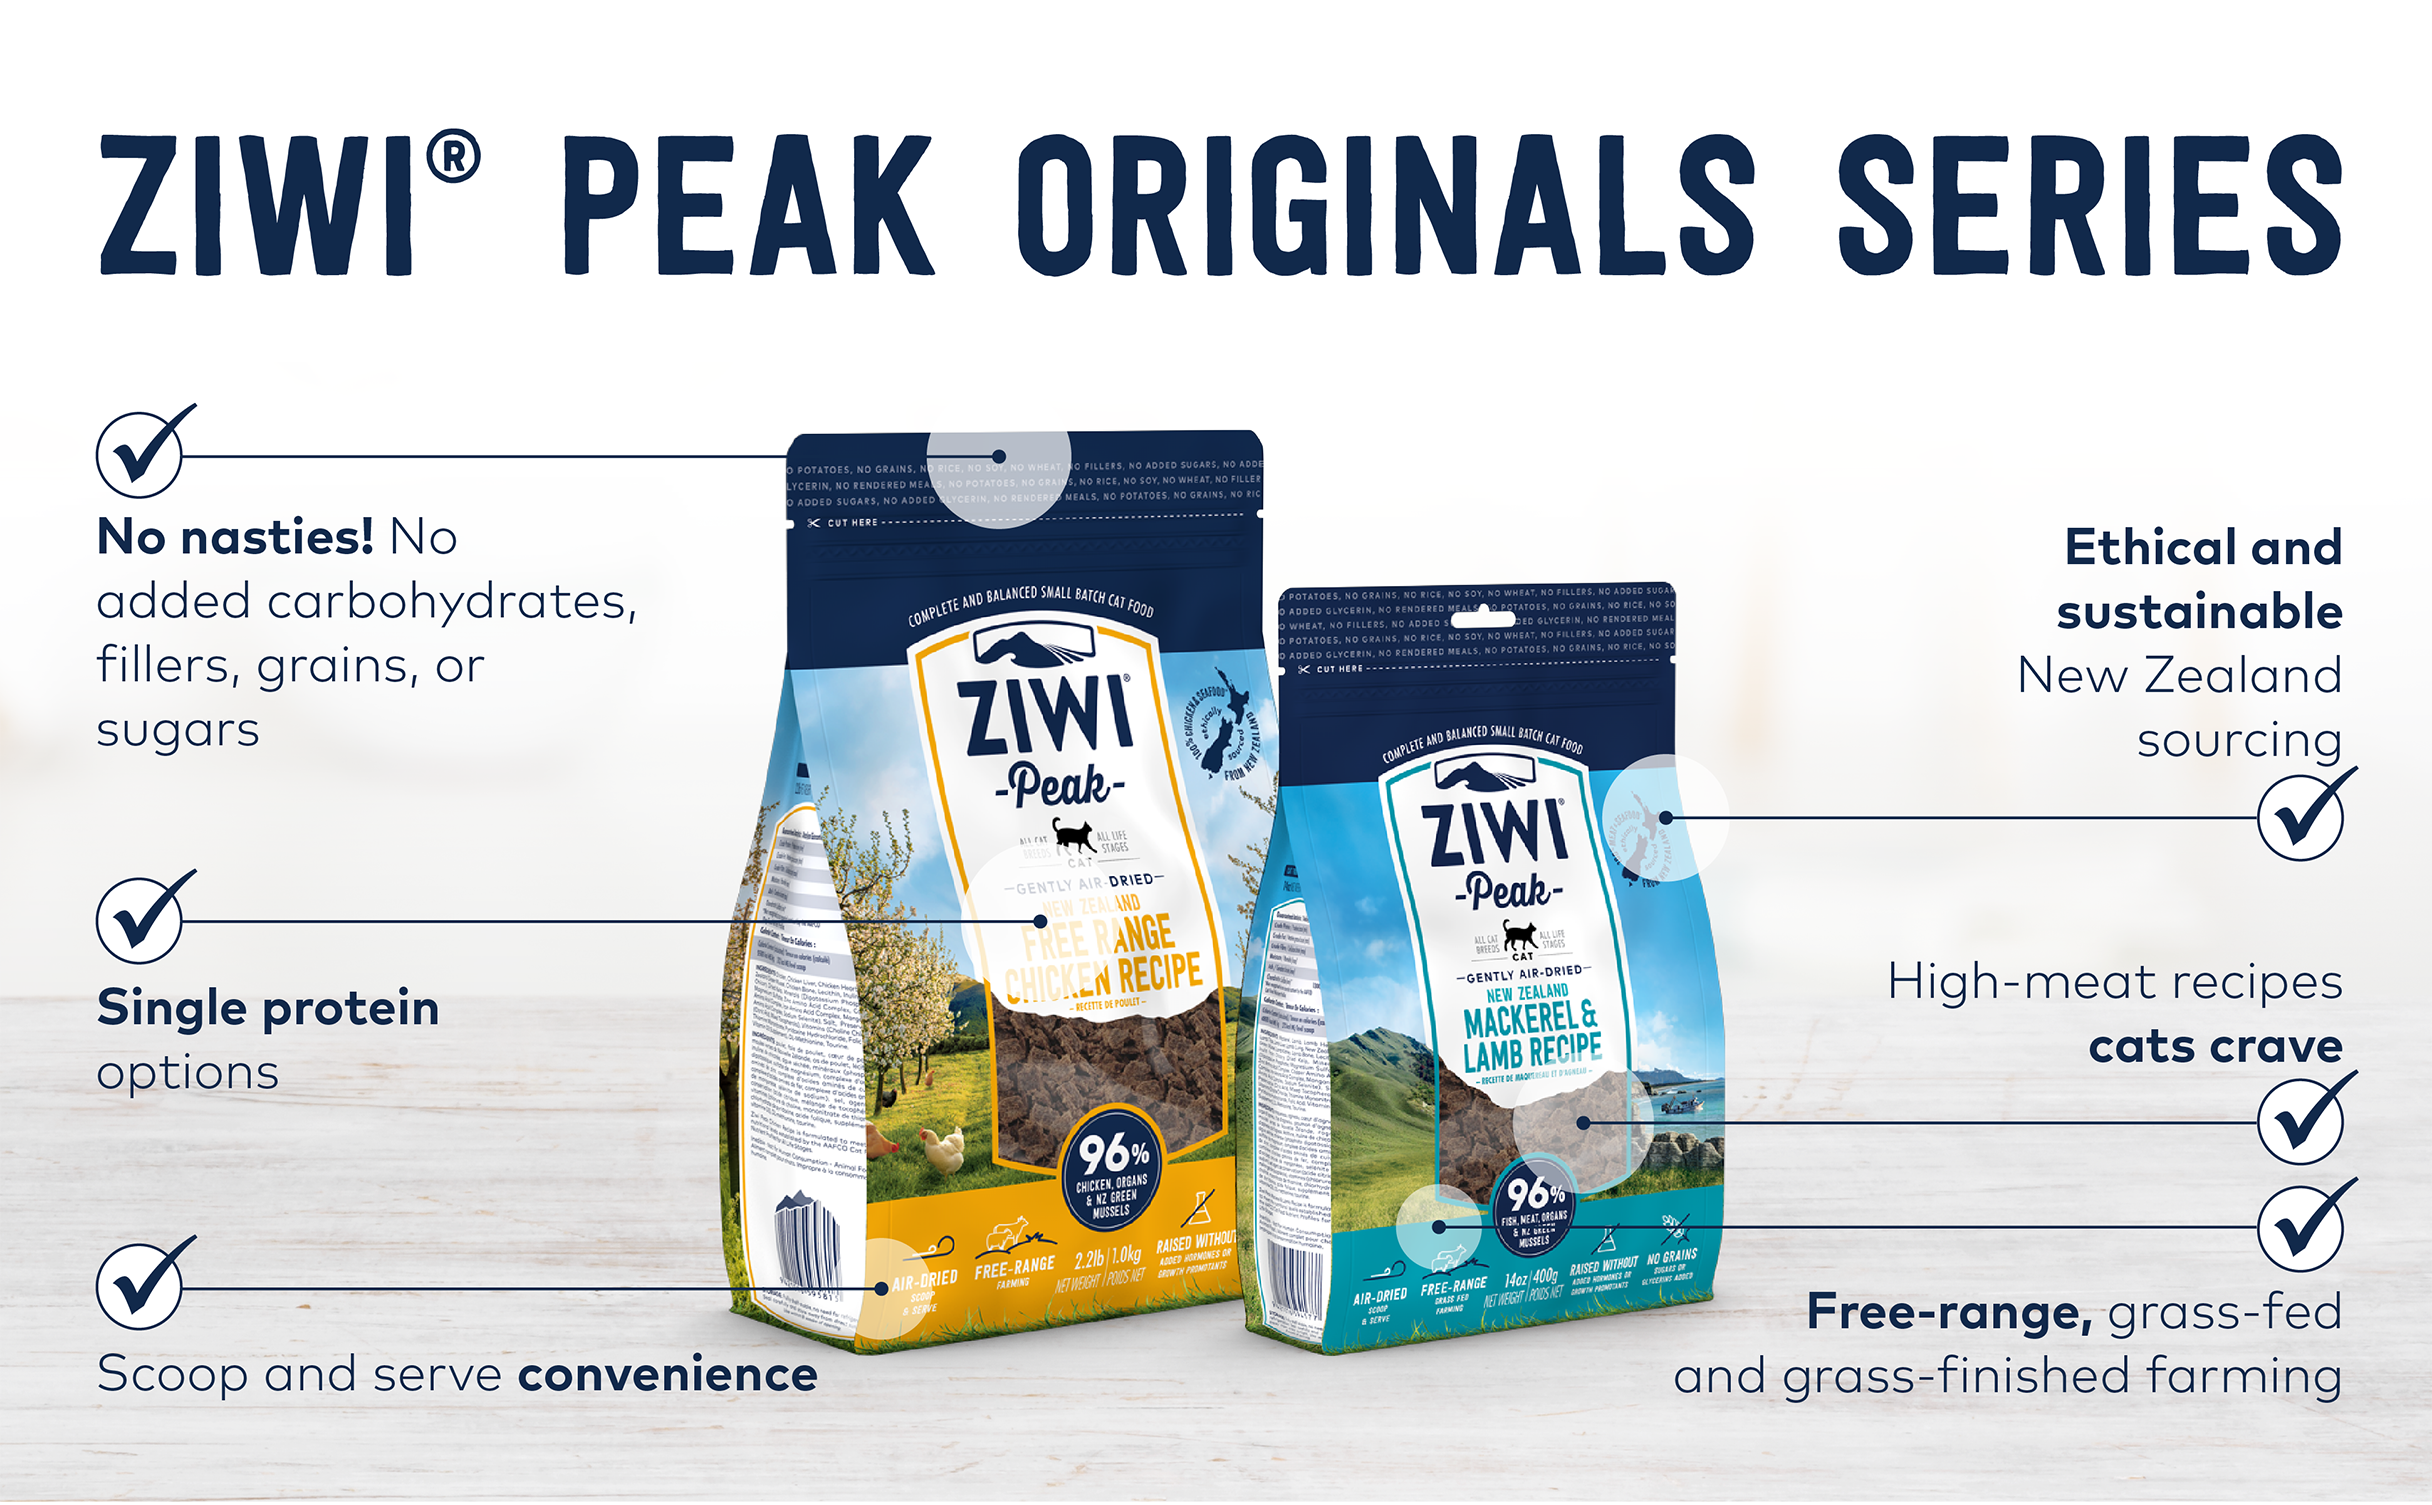 Ziwi Peak Originals Series